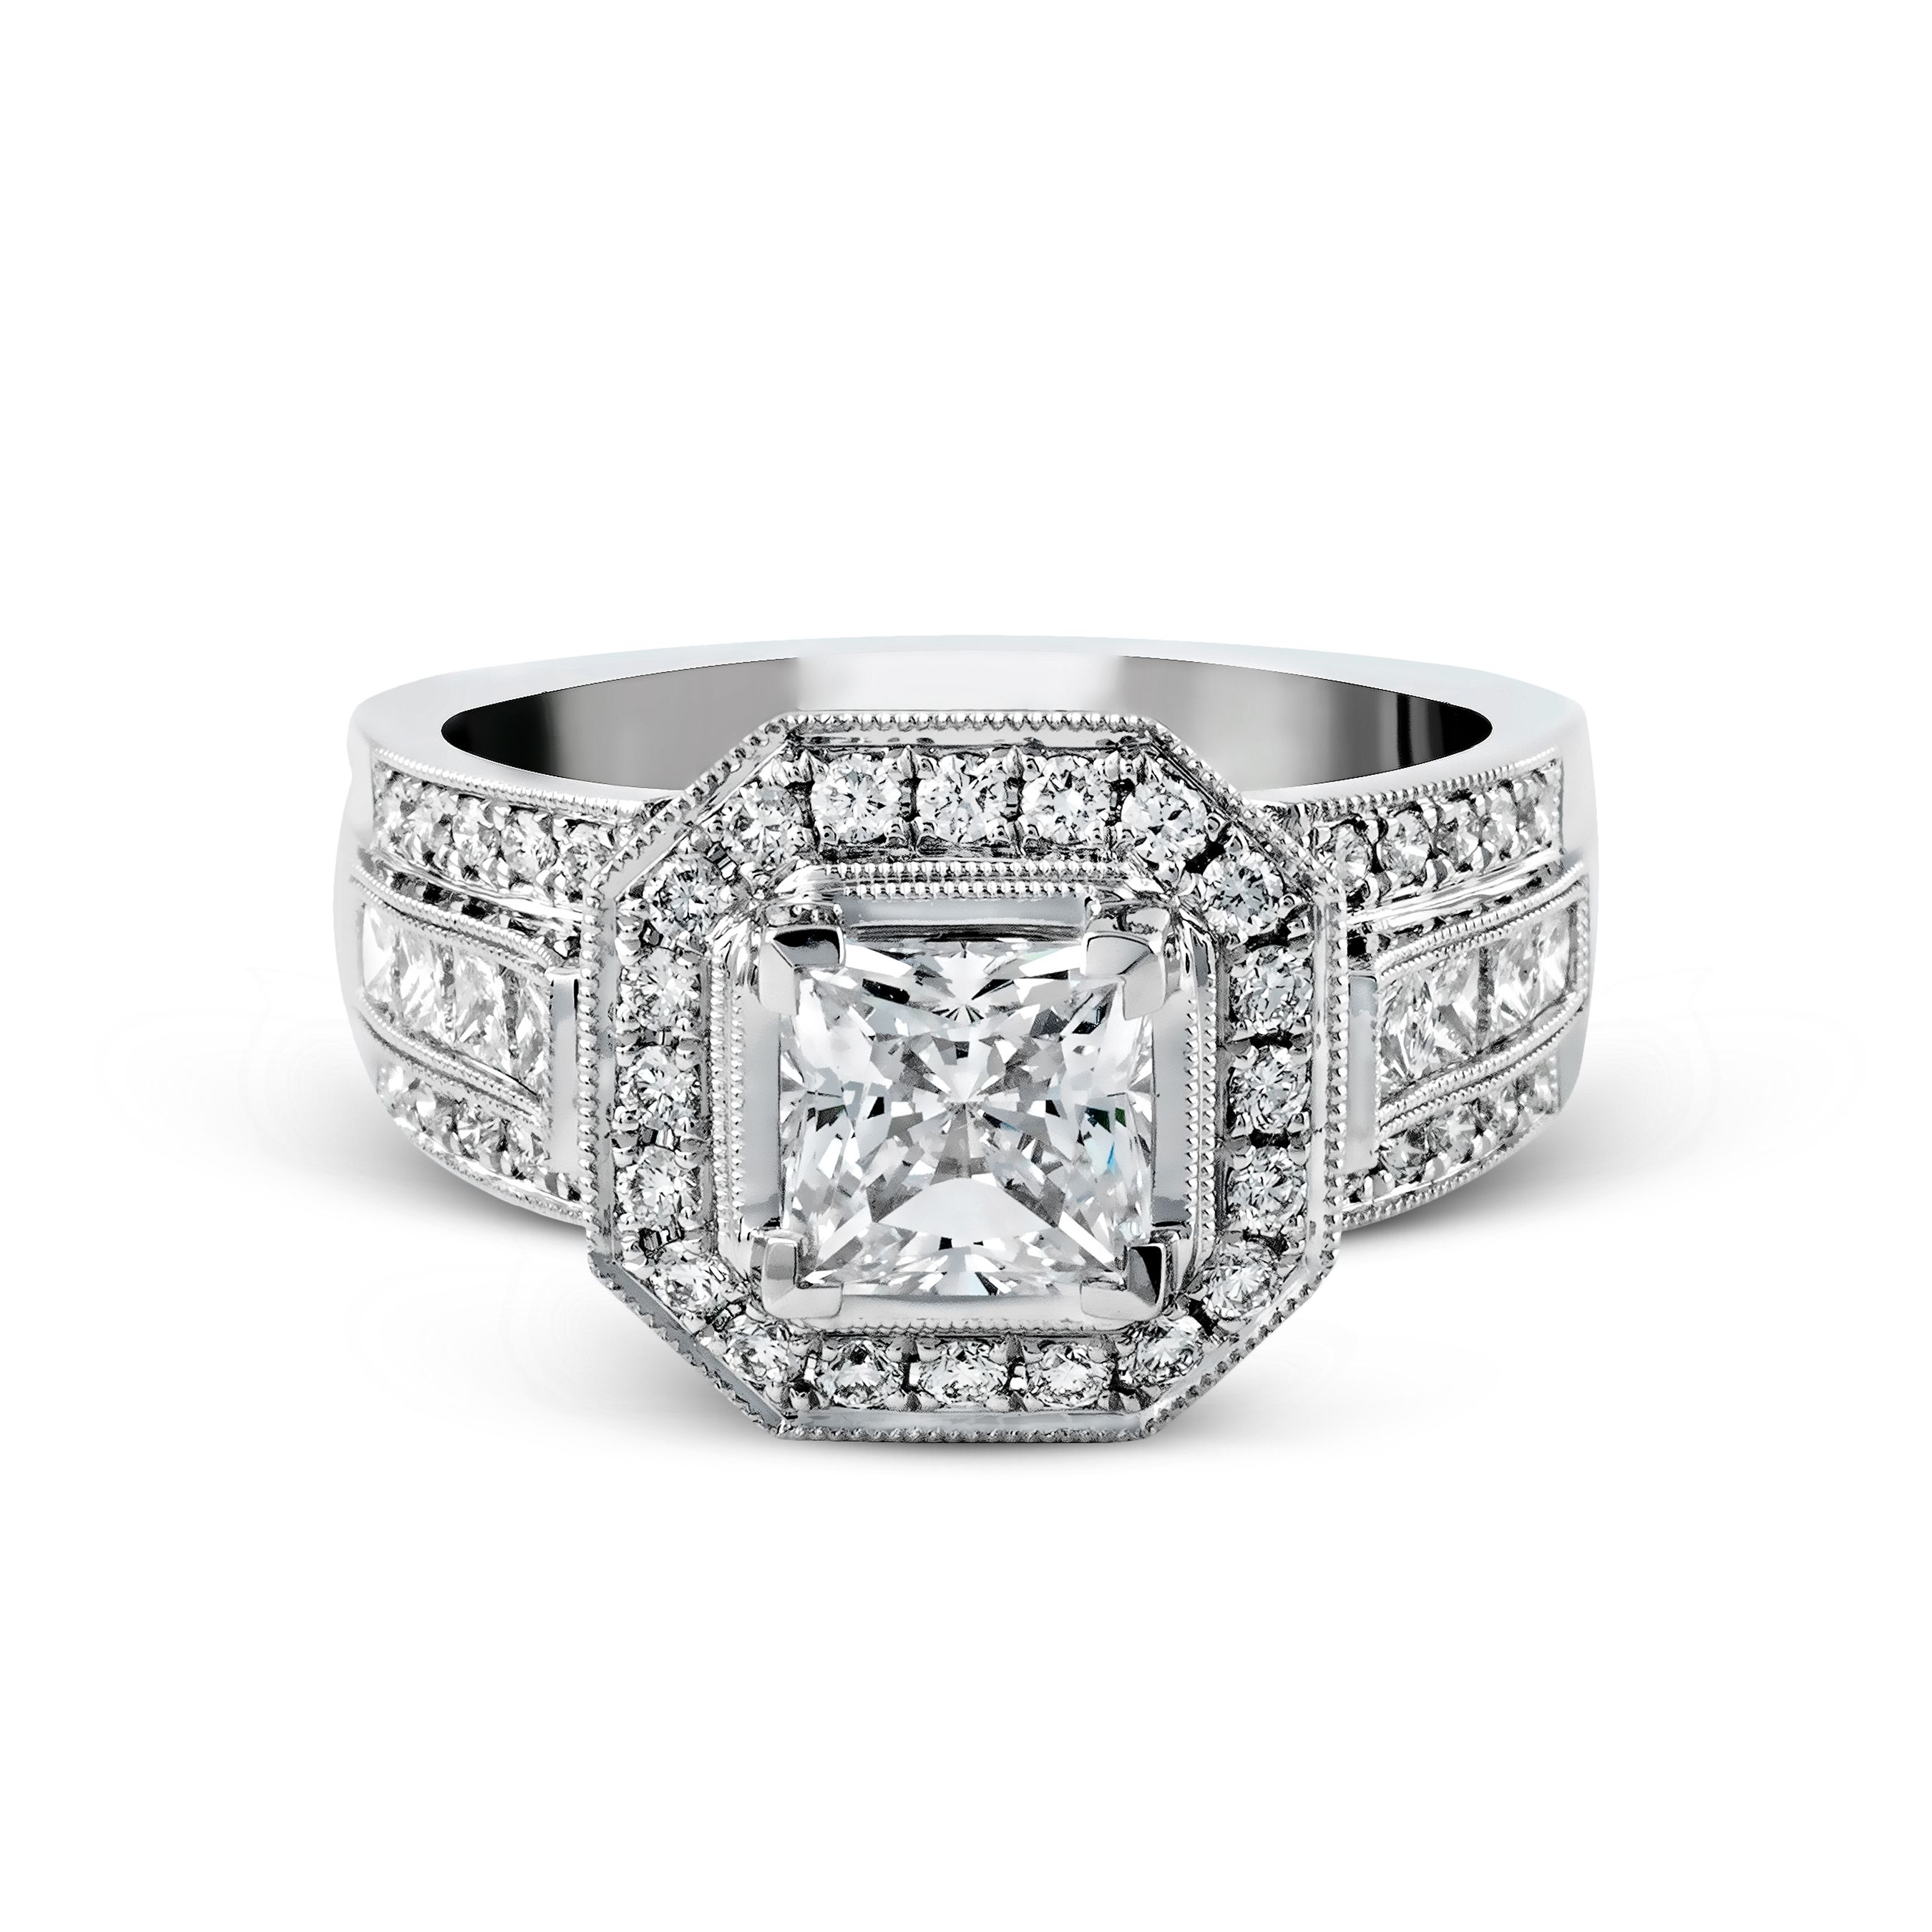 NR109-A Passion Collection Platinum Princess Cut Engagement Ring